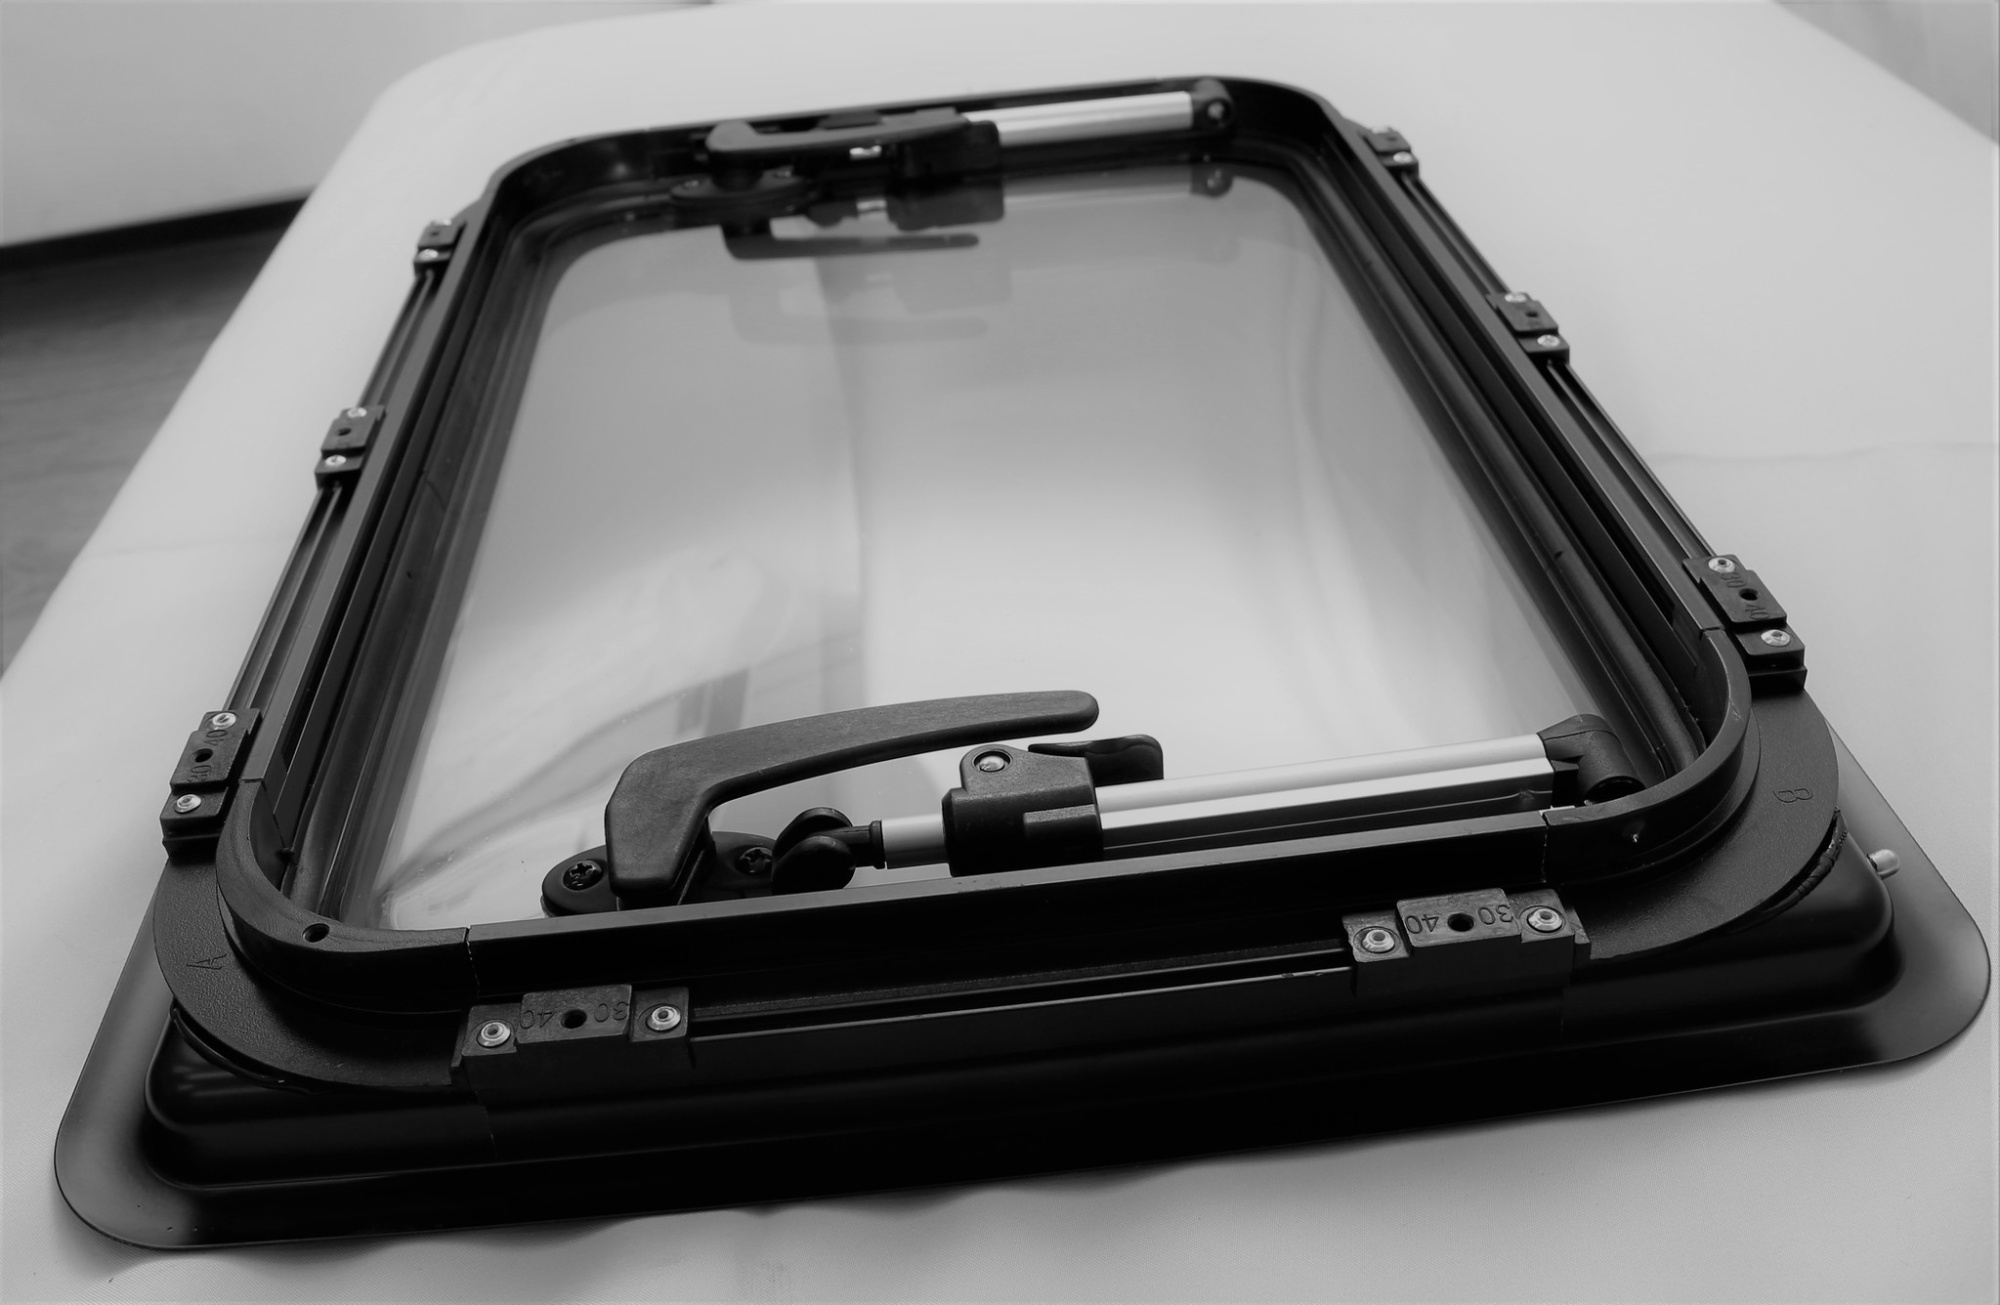 картинка Окно откидное Mobile Comfort W8050P 800x500 мм, штора плиссированная, антимоскитка